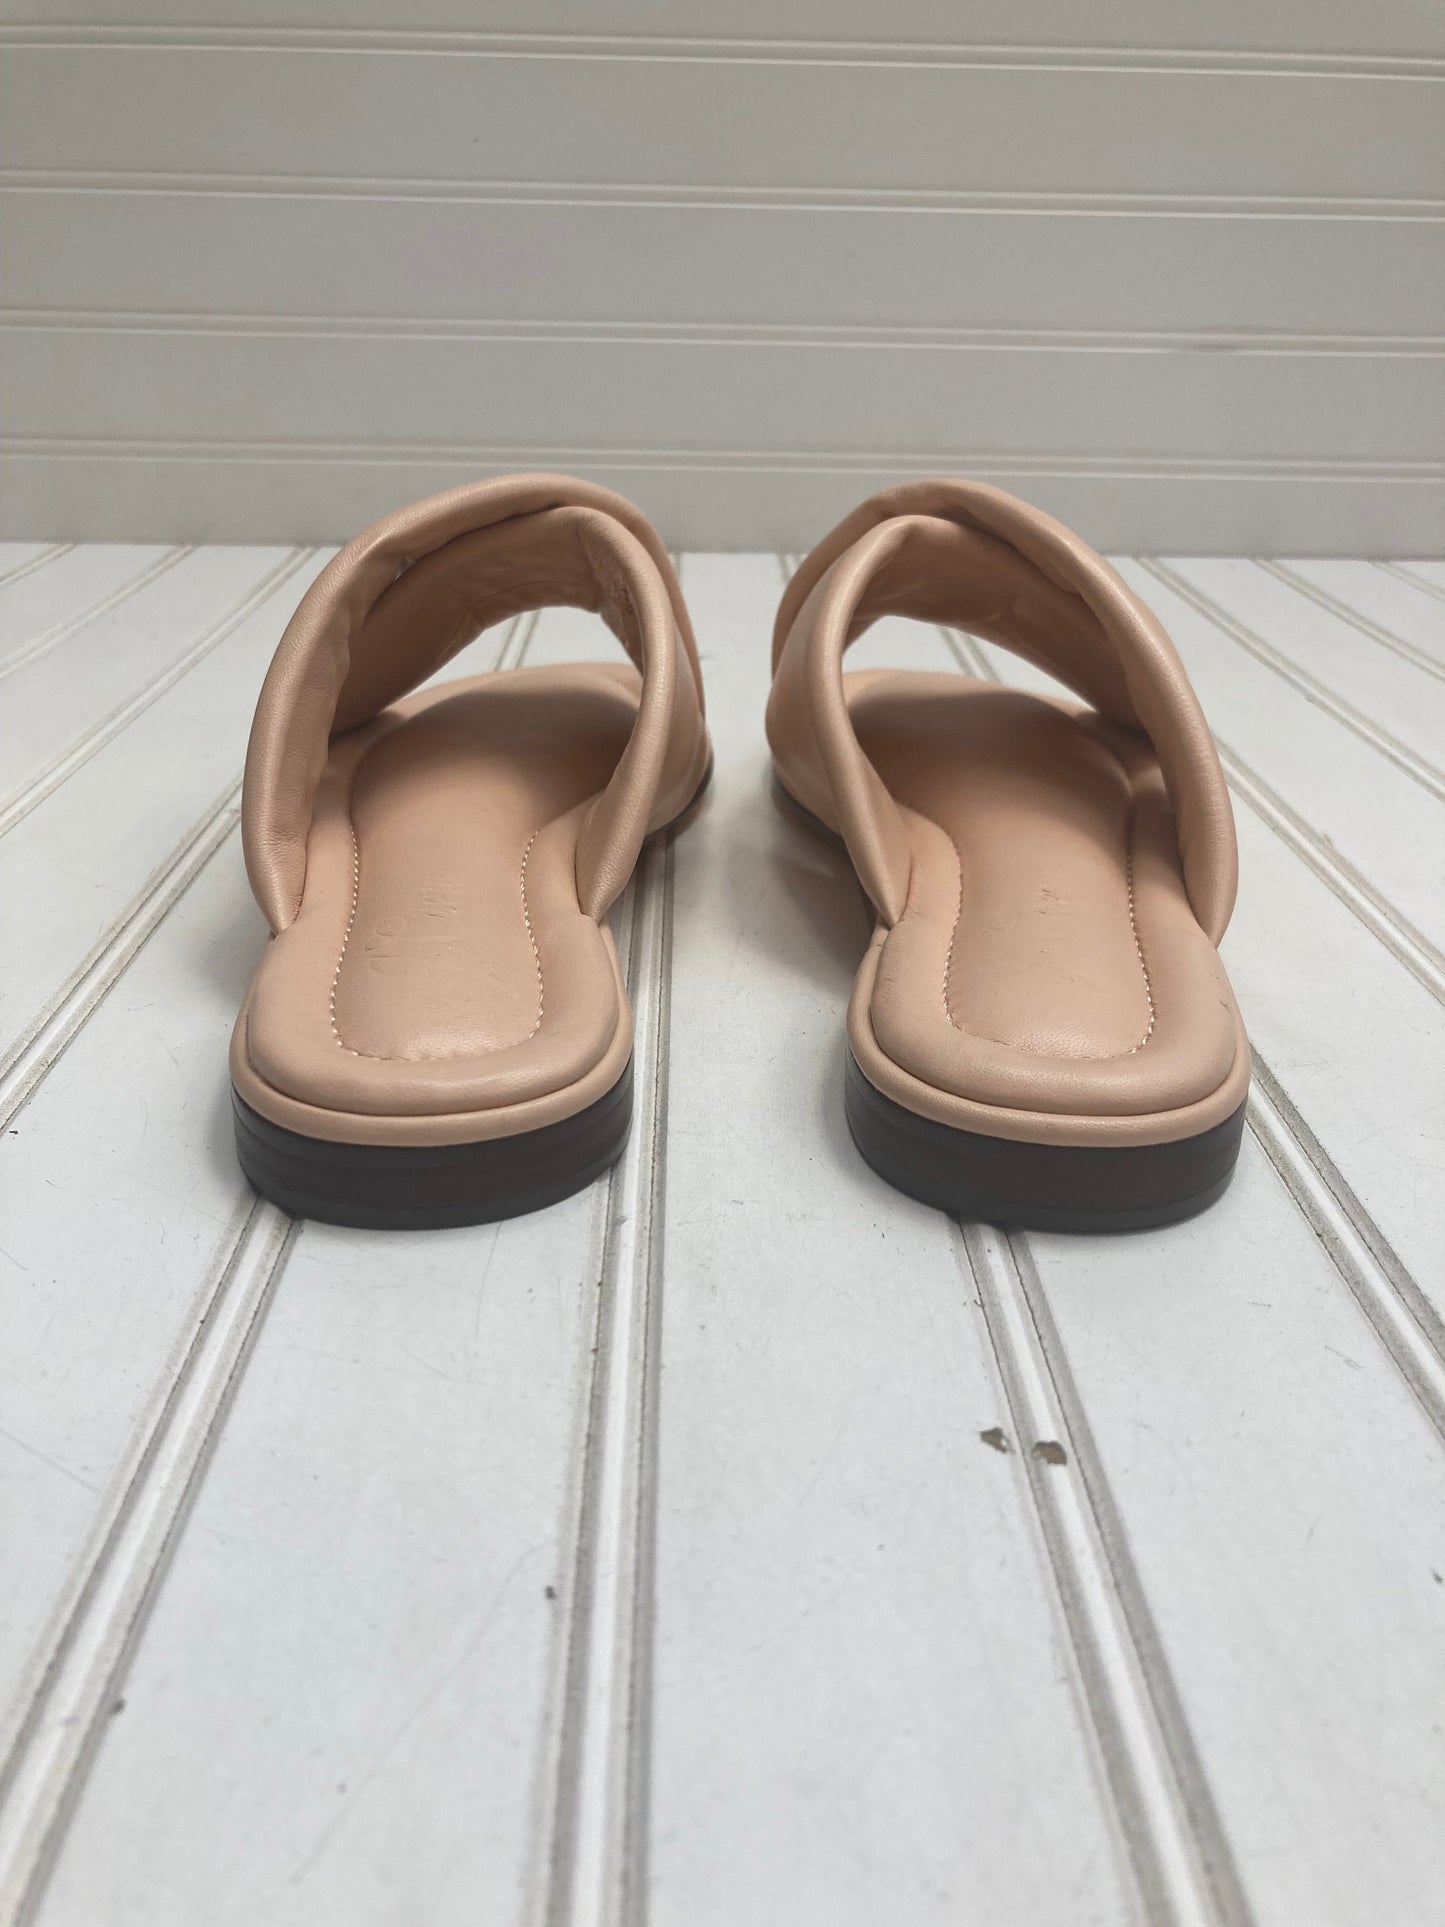 Peach Sandals Flats J. Crew, Size 8.5